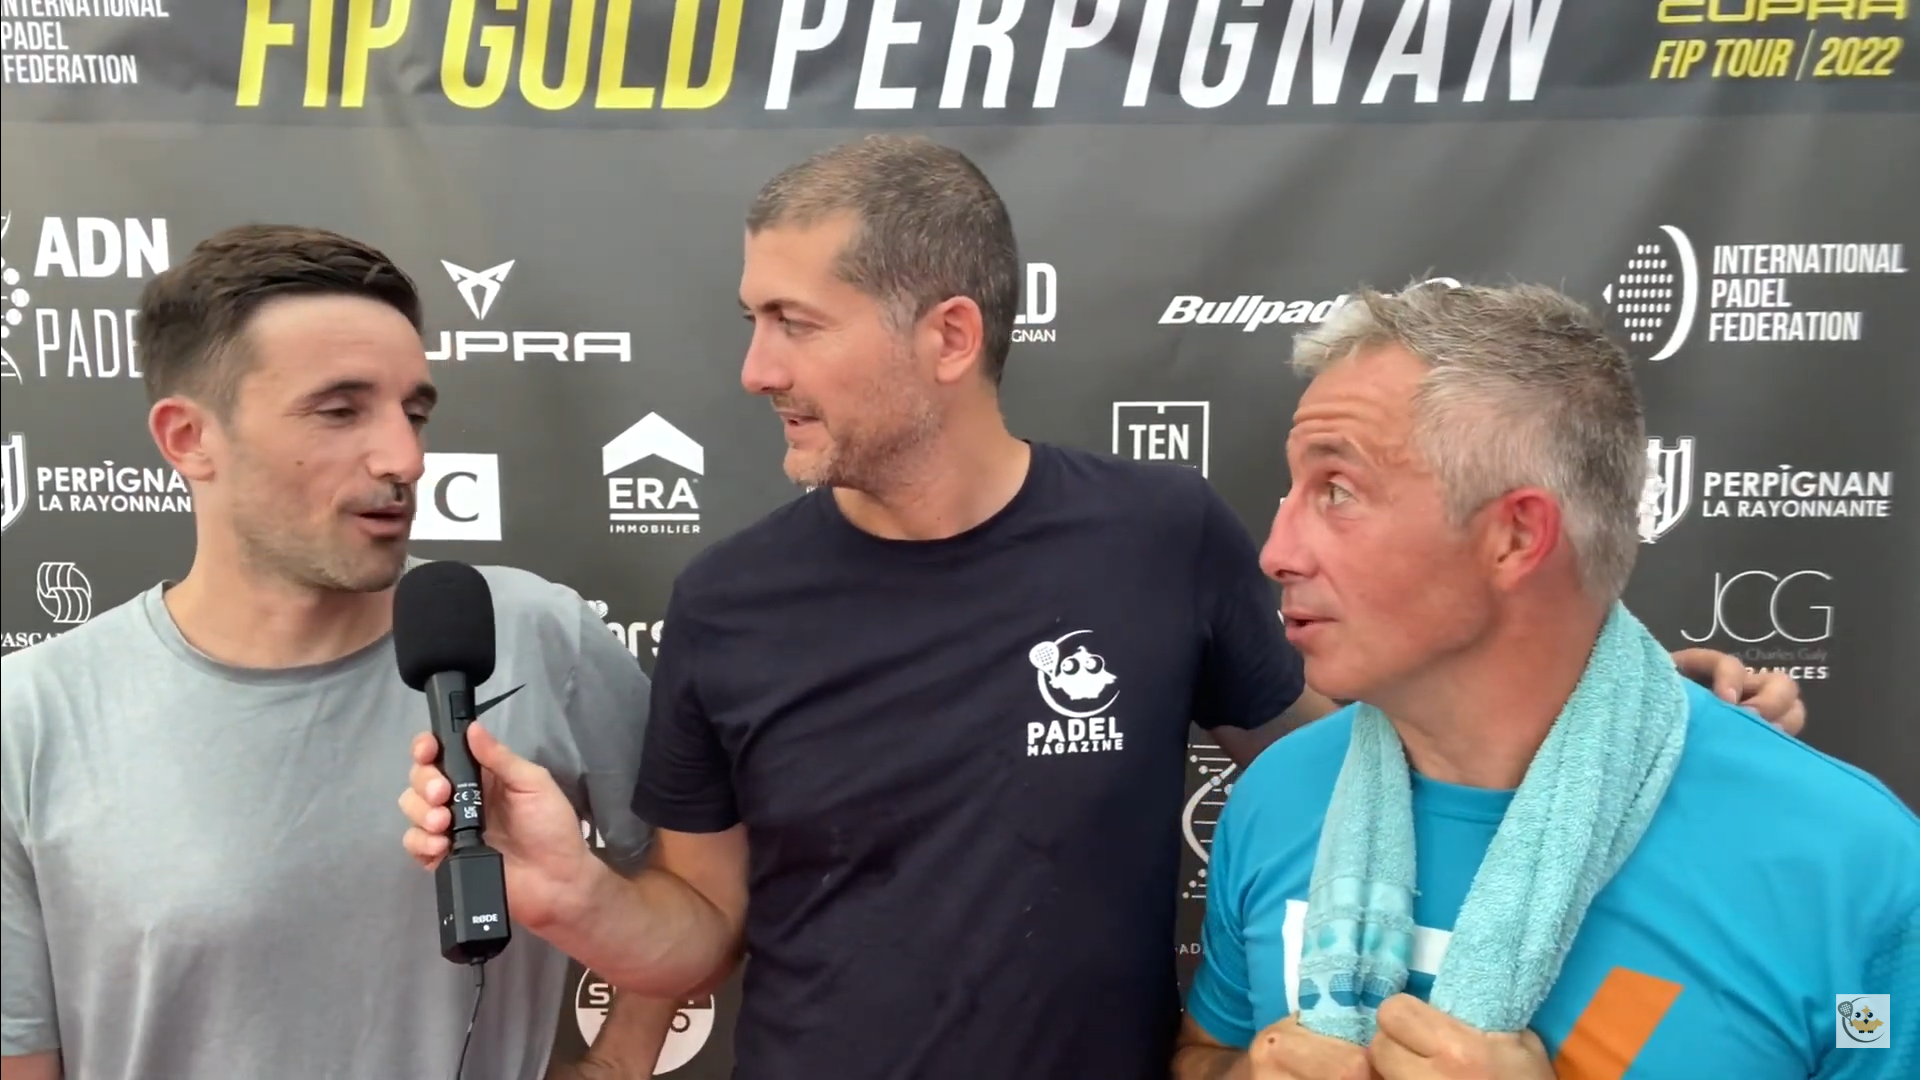 JP Pellicer e Dominique Campana Fip Gold Perpignan ITW